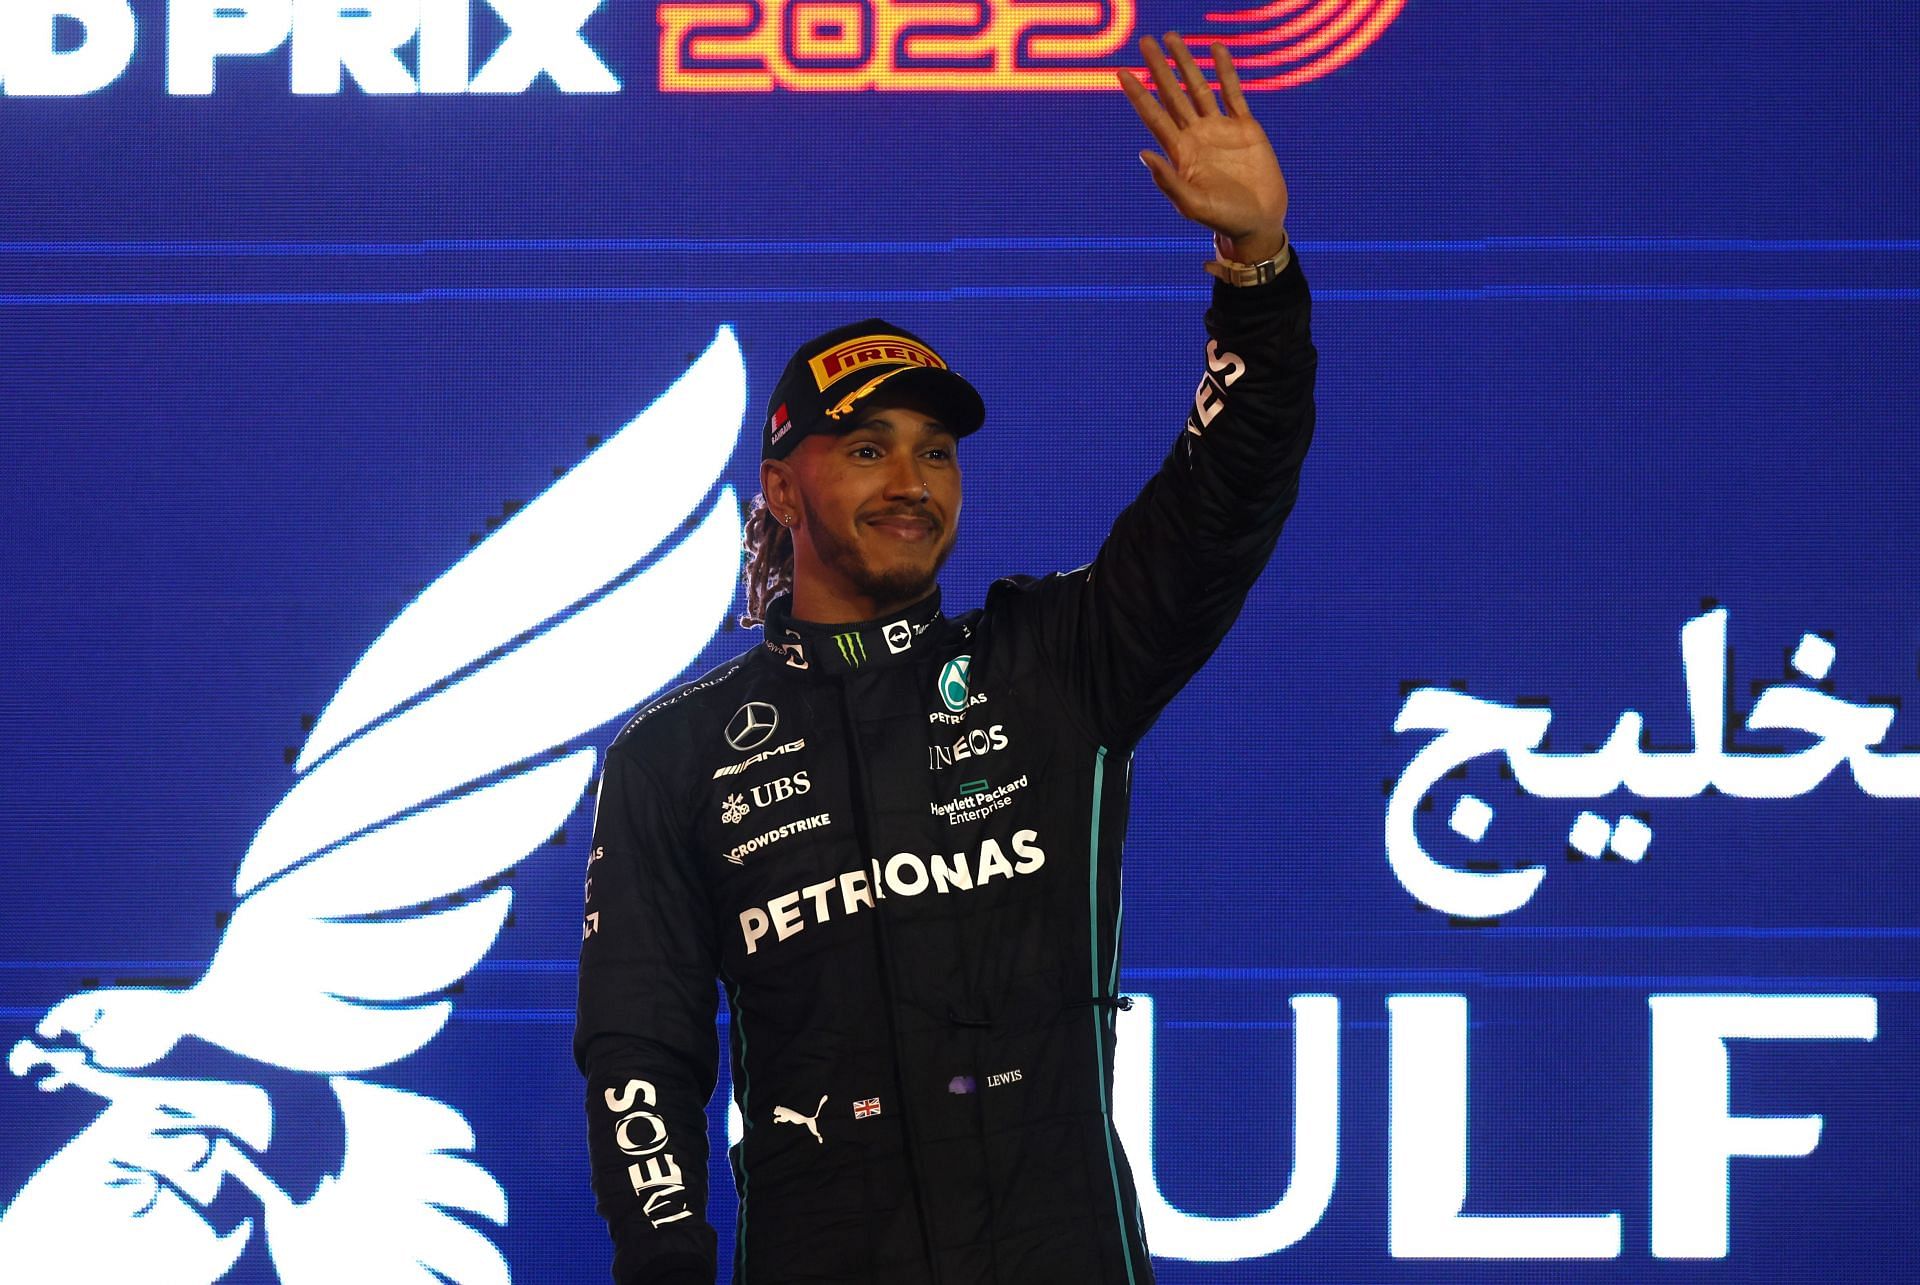 Lewis Hamilton bagged a surpise podium for his team in Bahrain